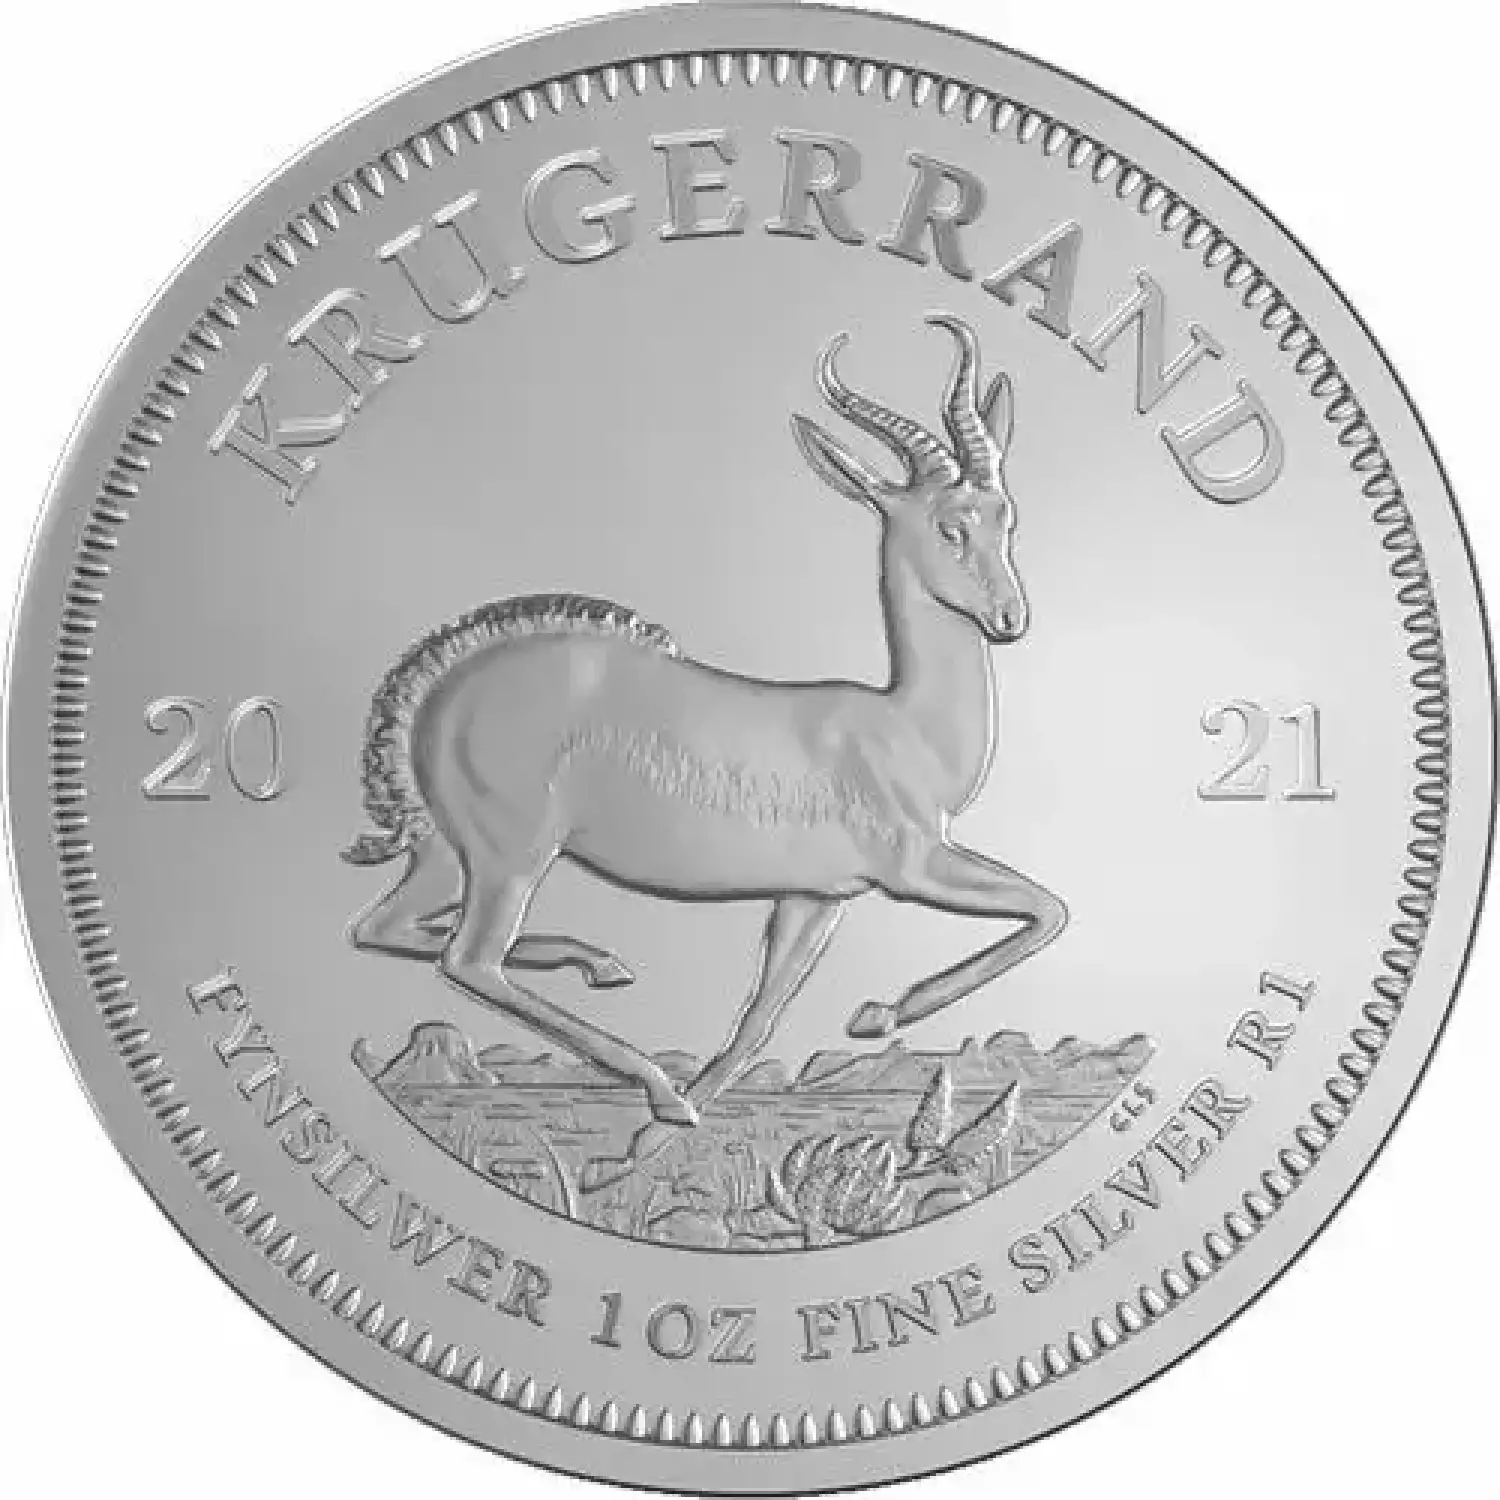 2021 1 oz South African Silver Krugerrand Coin (BU)